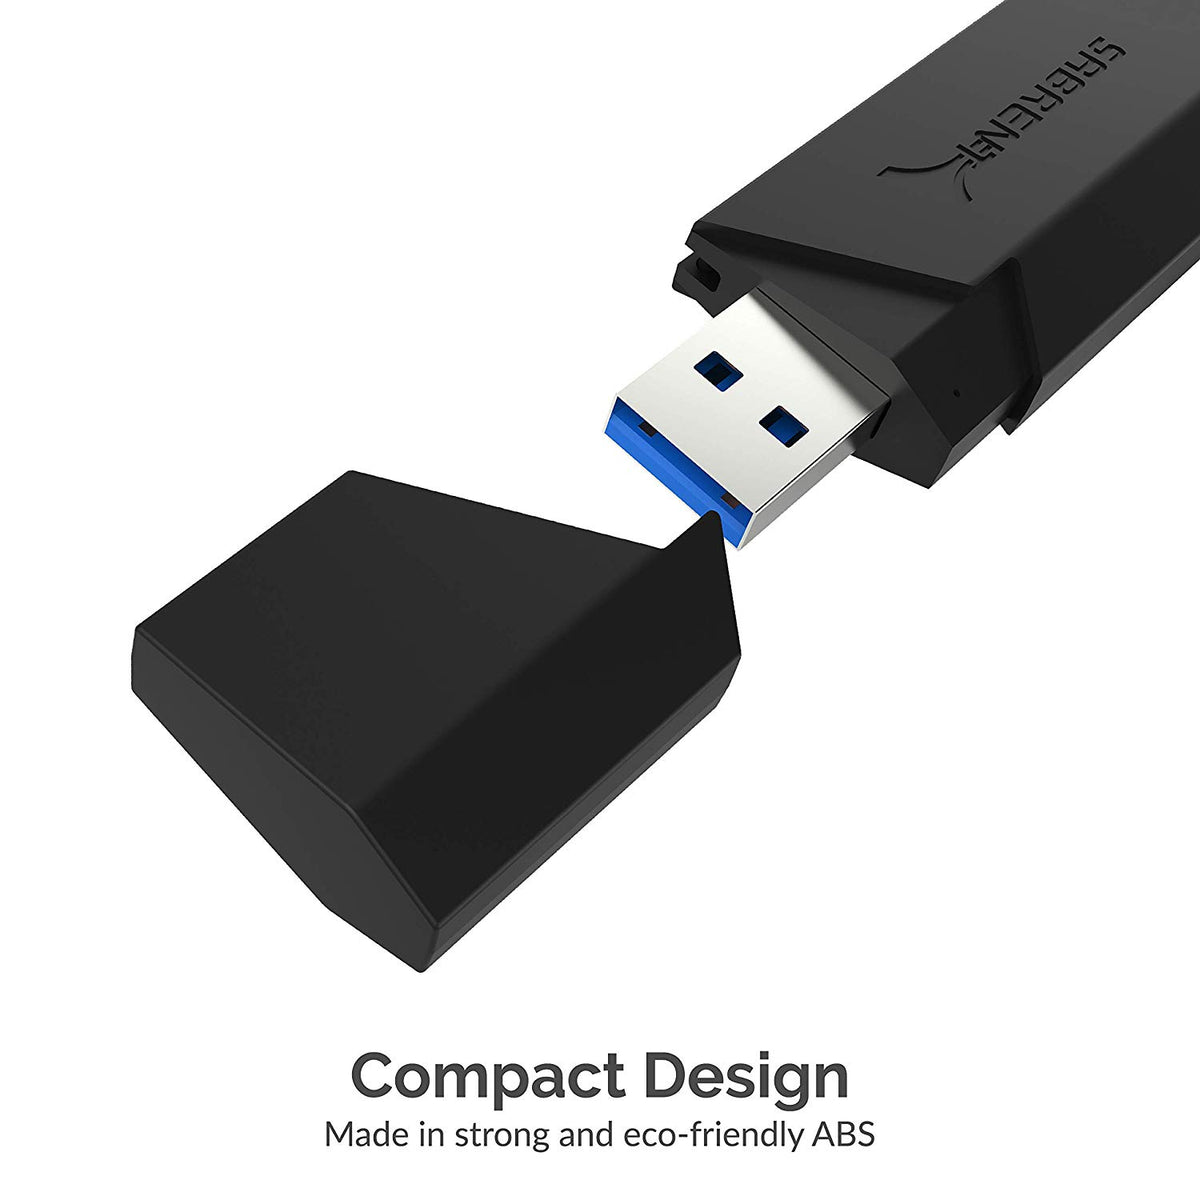 Mini USB 3.0 Micro SD And SD Card Reader